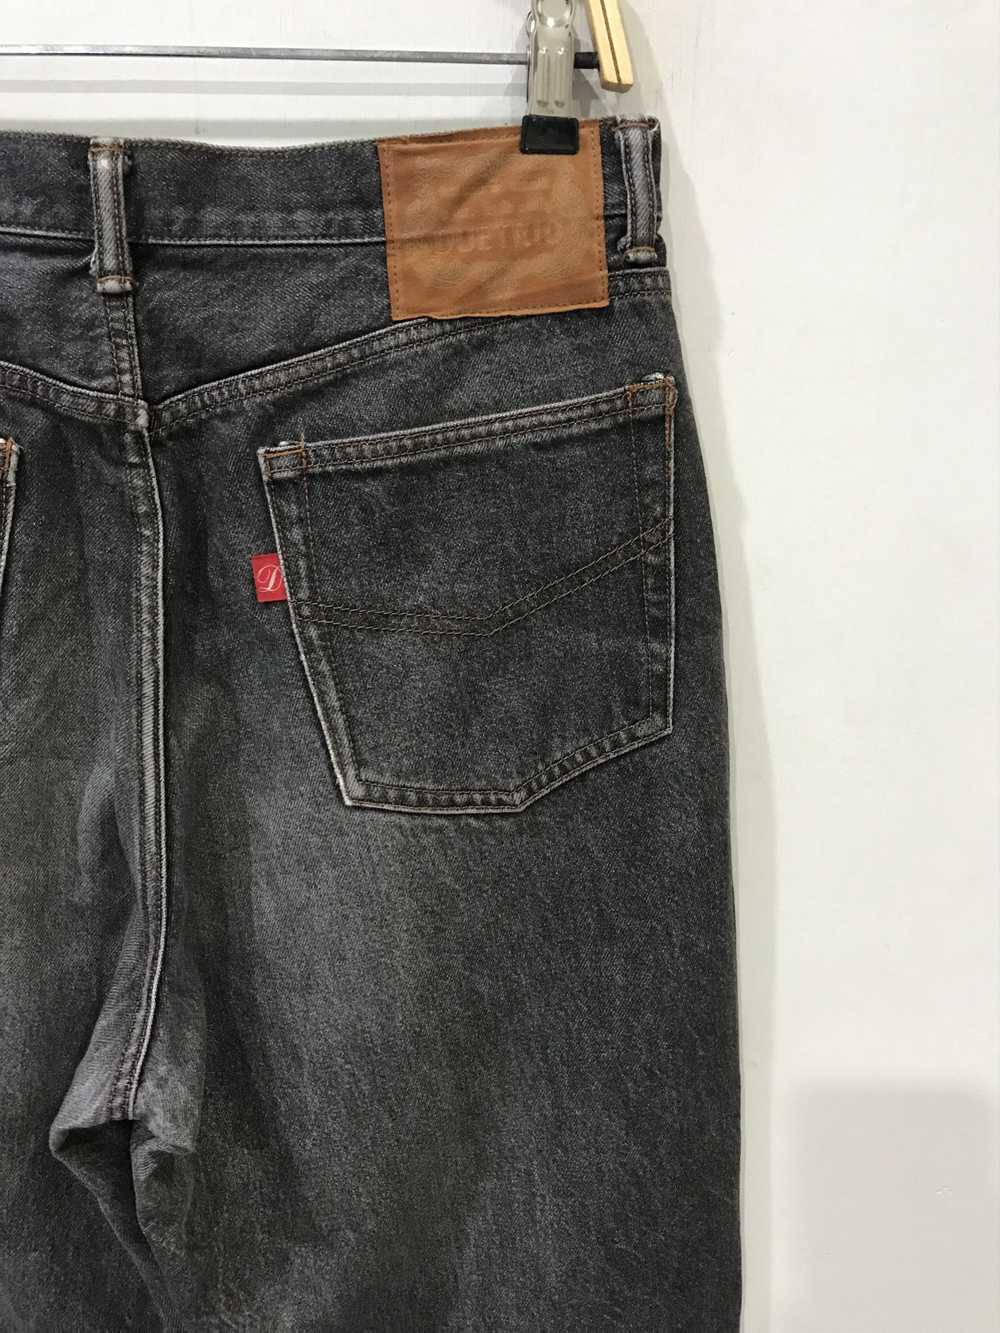 2-D5 DUETRIO By ISSEY MIYAKE Designer Jeans - image 12